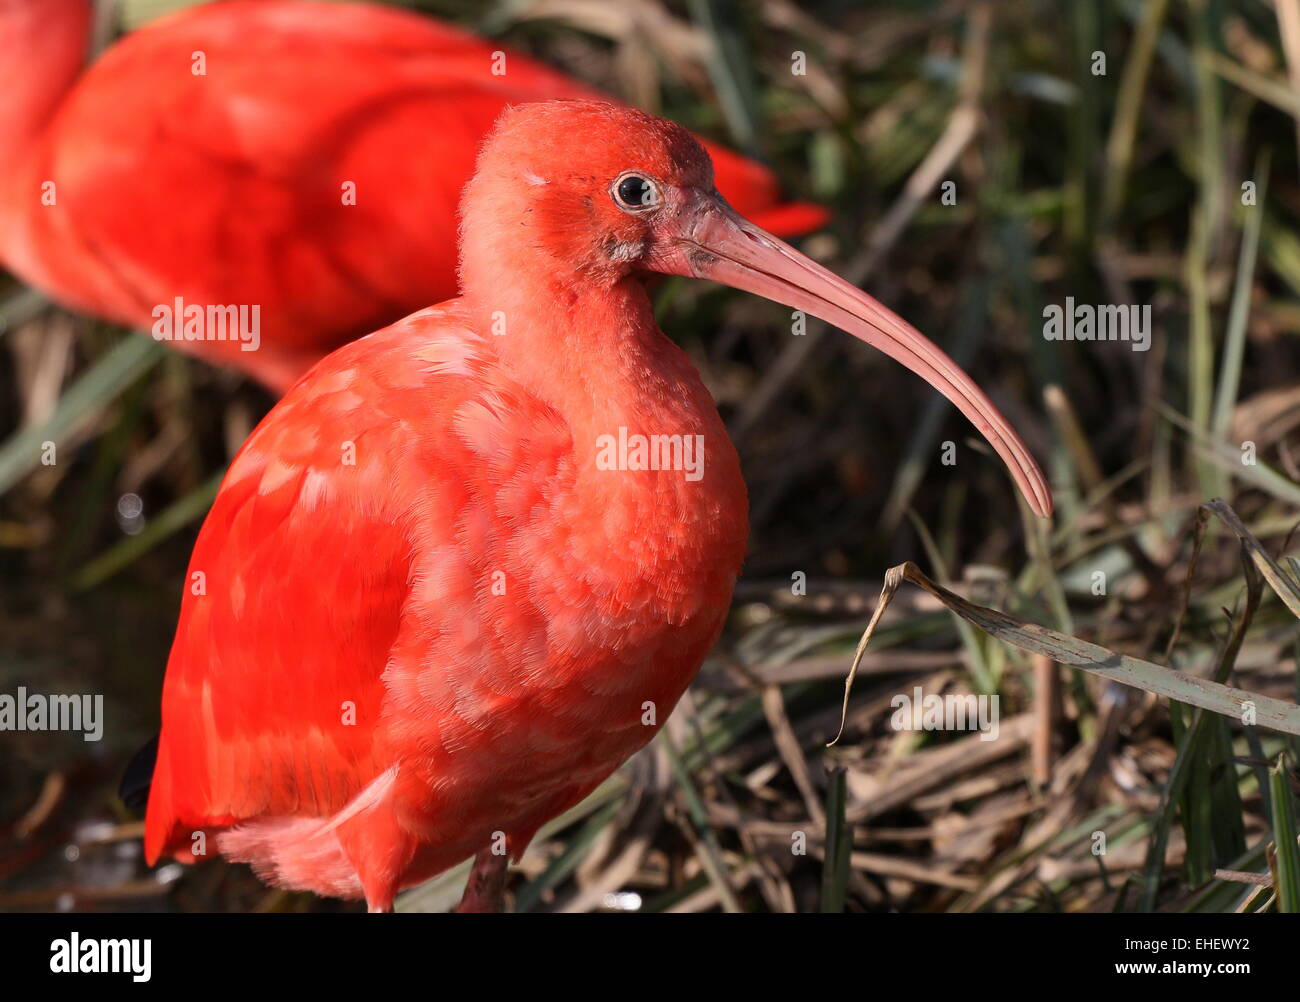 Scarlet Ibis (Eudocimus ruber) portrait, seen in profile Stock Photo